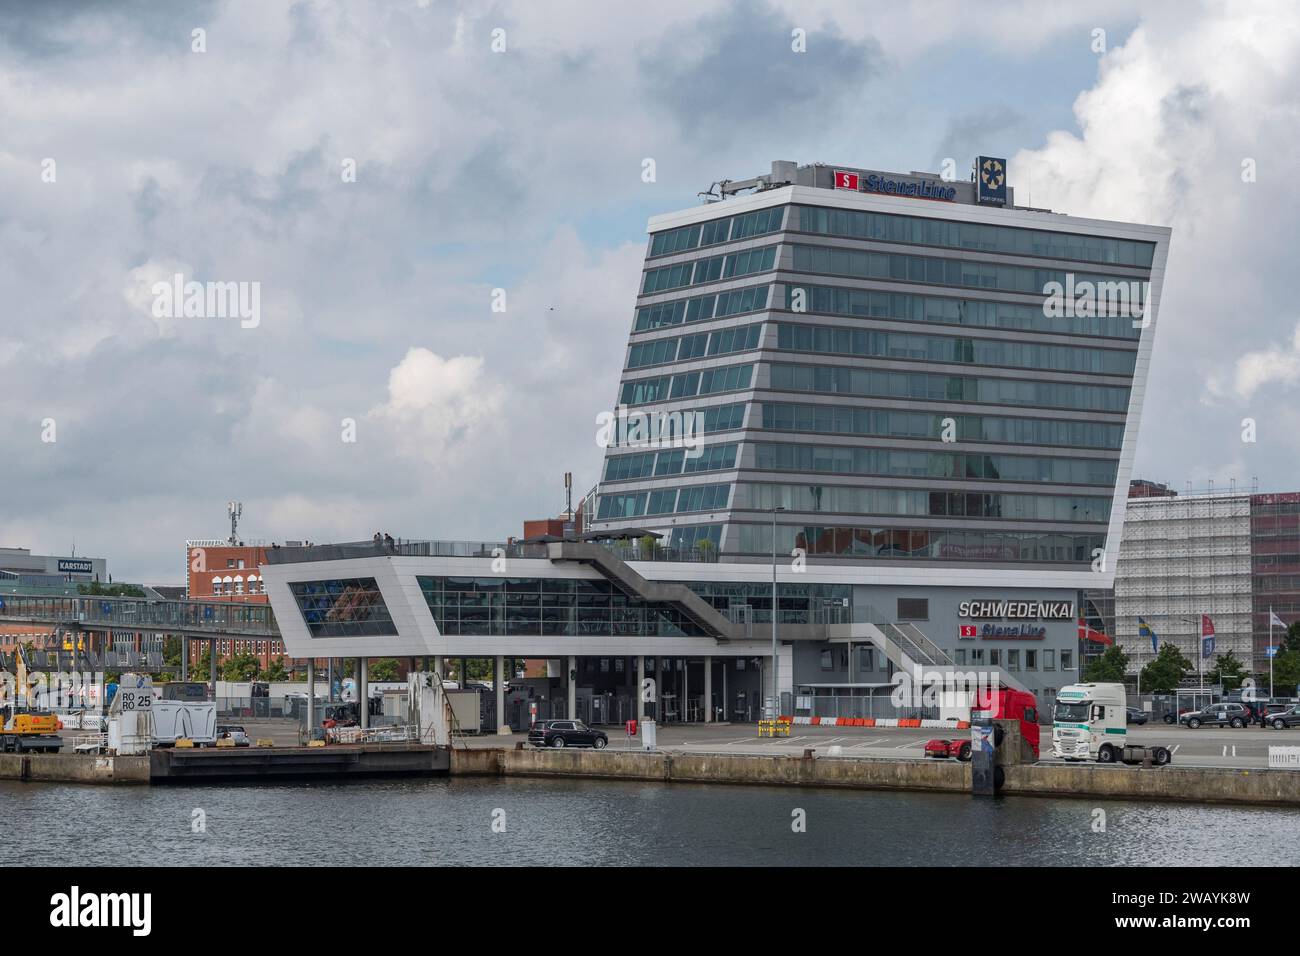 The Kiel (Schwedenkai) ferry terminal for Stena Line in the harbour in Kiel, Germany. Stock Photo